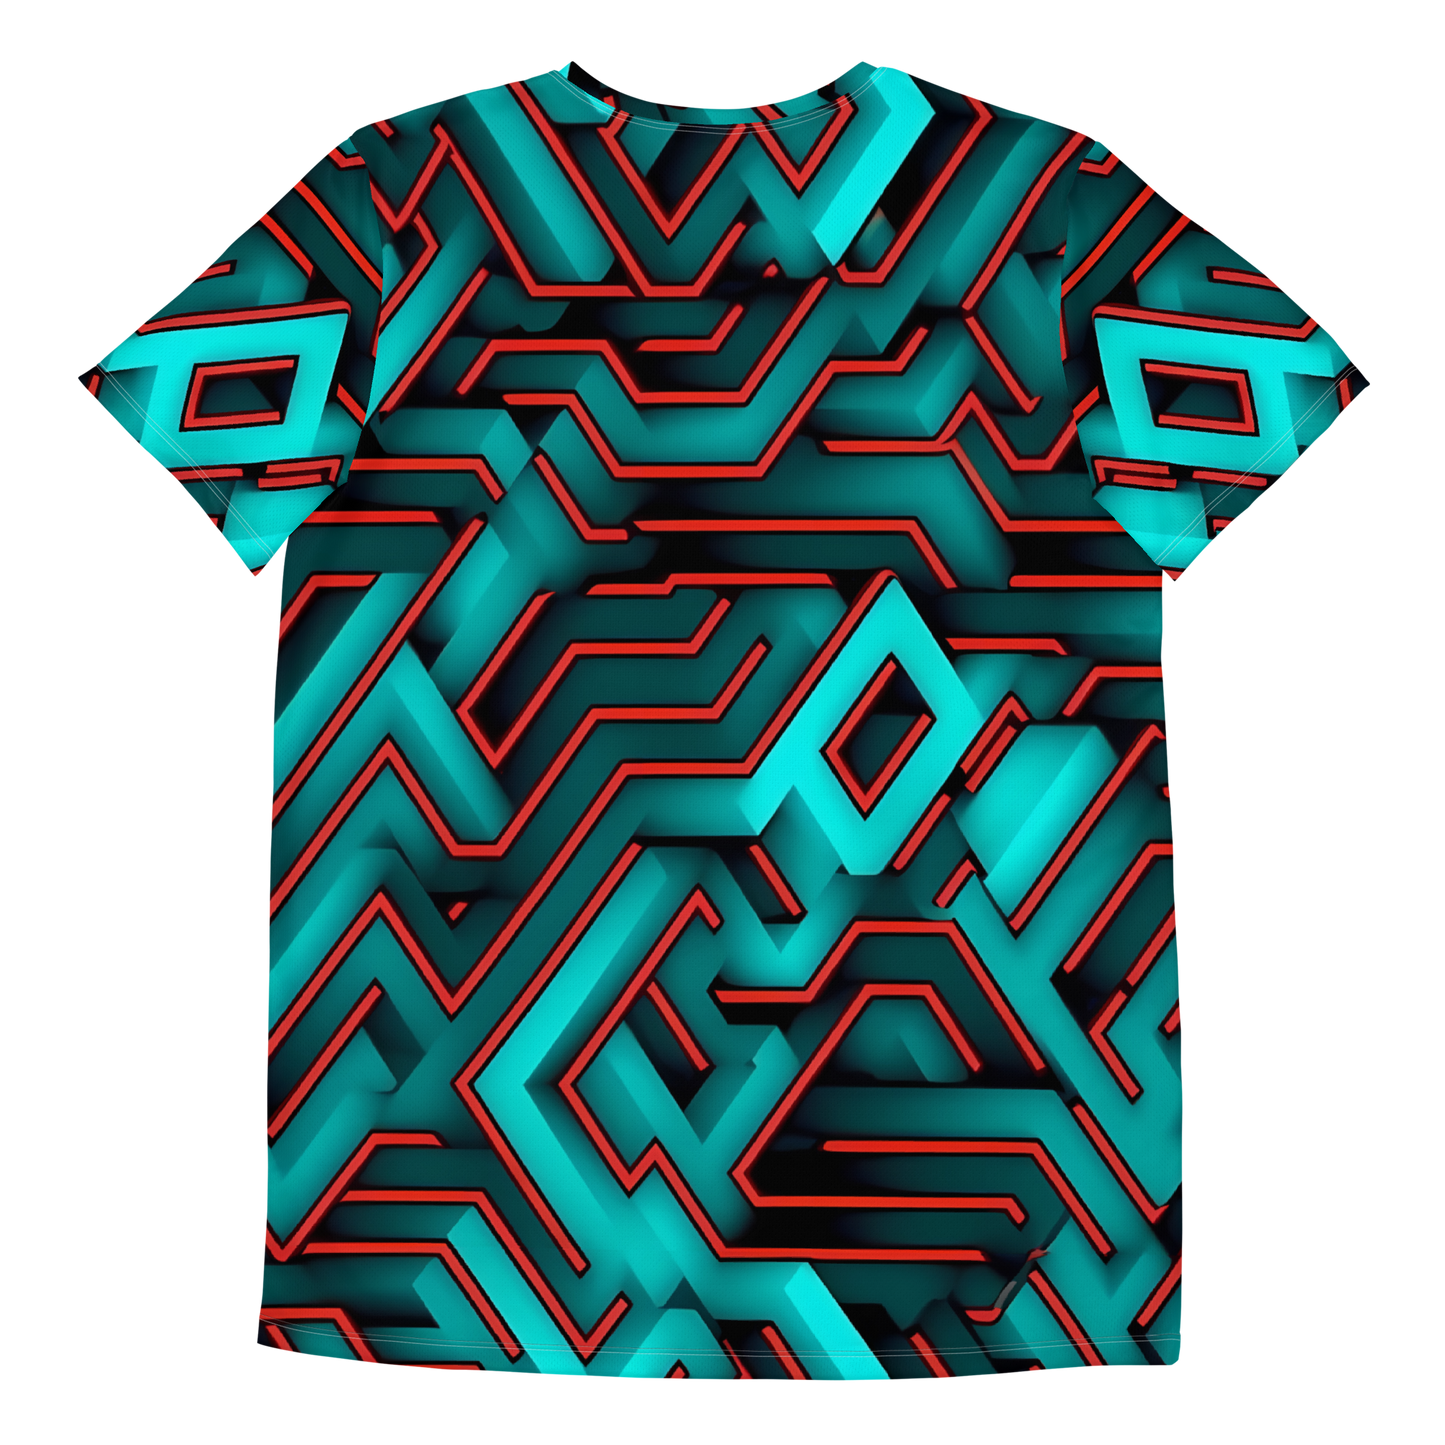 3D Maze Illusion | 3D Patterns | All-Over Print Men's Athletic T-Shirt - #2